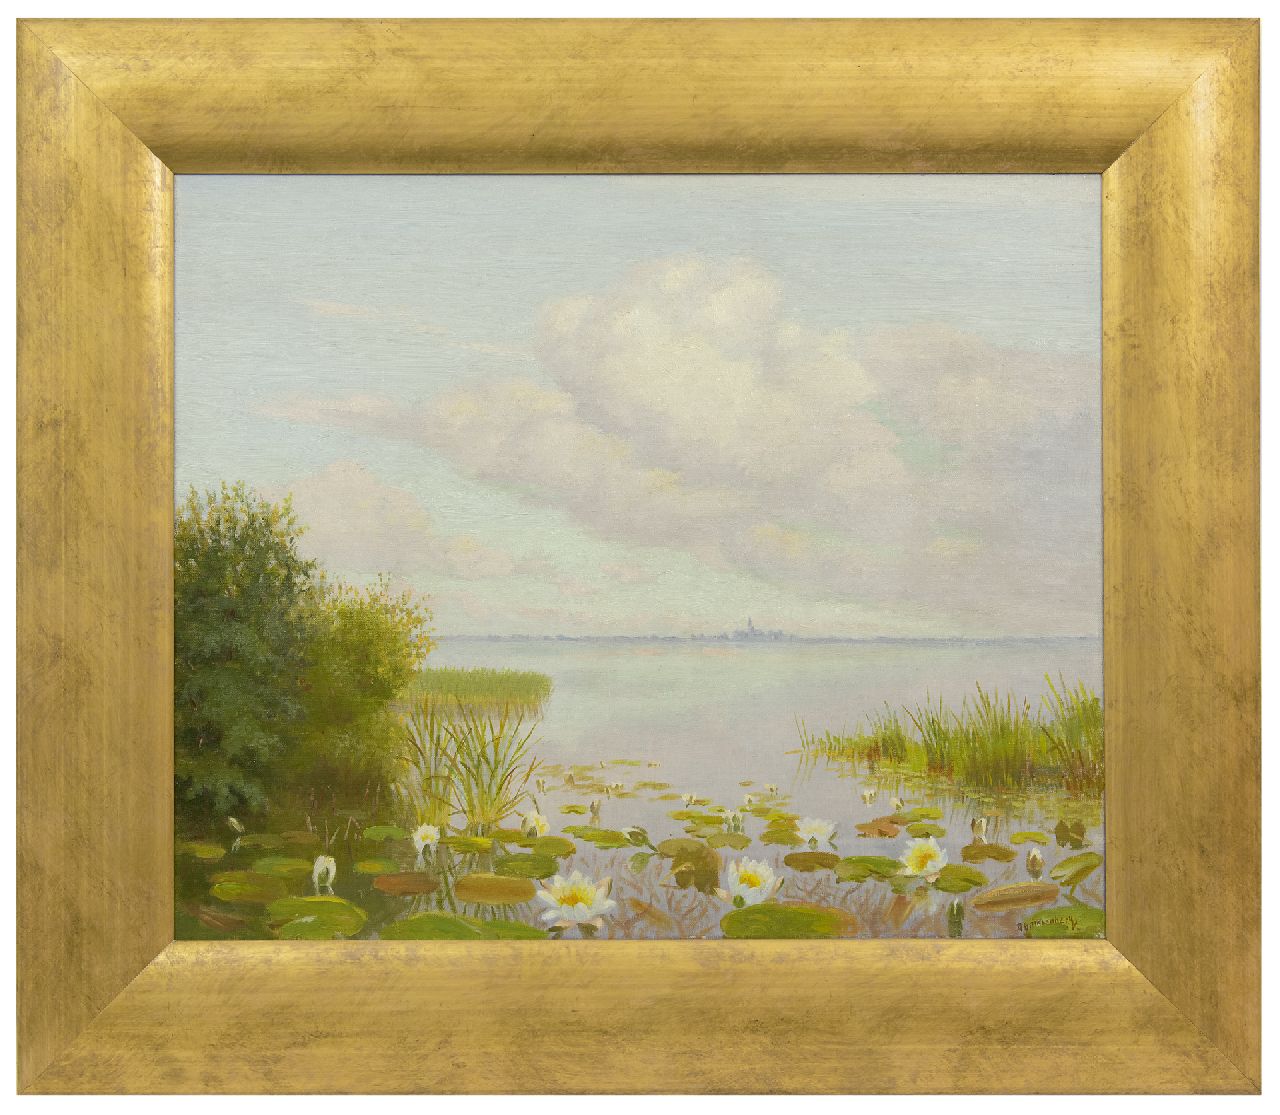 Smorenberg D.  | Dirk Smorenberg | Paintings offered for sale | Waterlillies in the  Loosdrechtse Plassen, oil on canvas 49.5 x 60.3 cm, signed l.r.